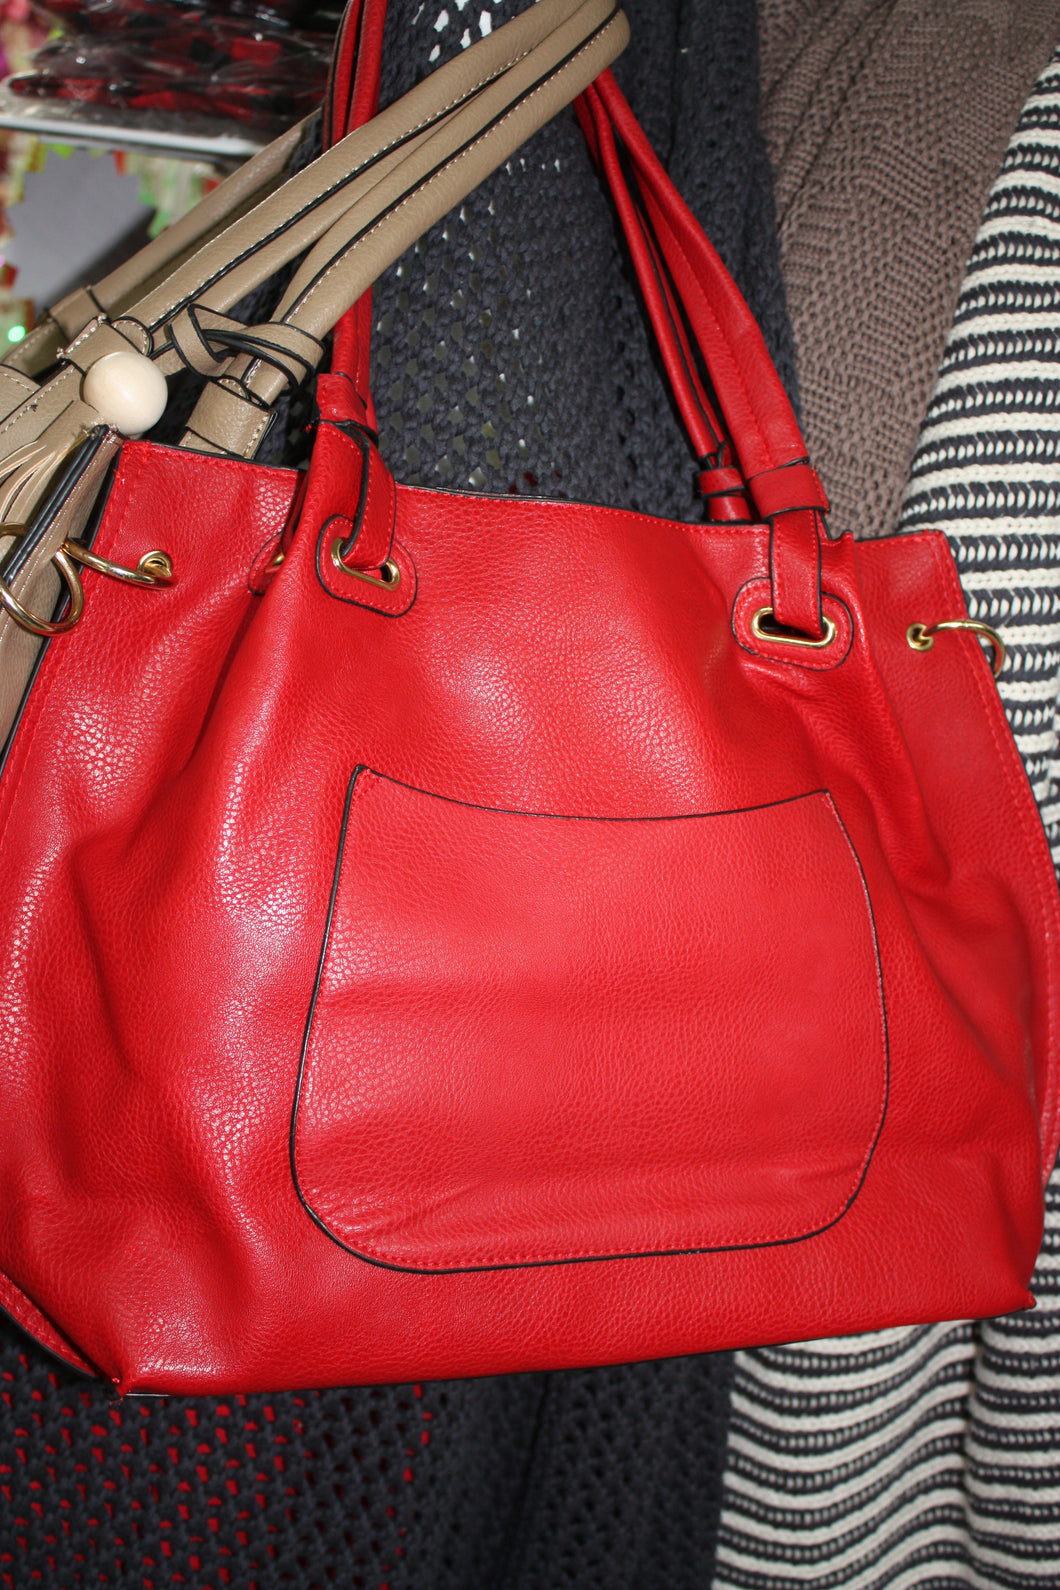 handbags Large handbag with outside pocket